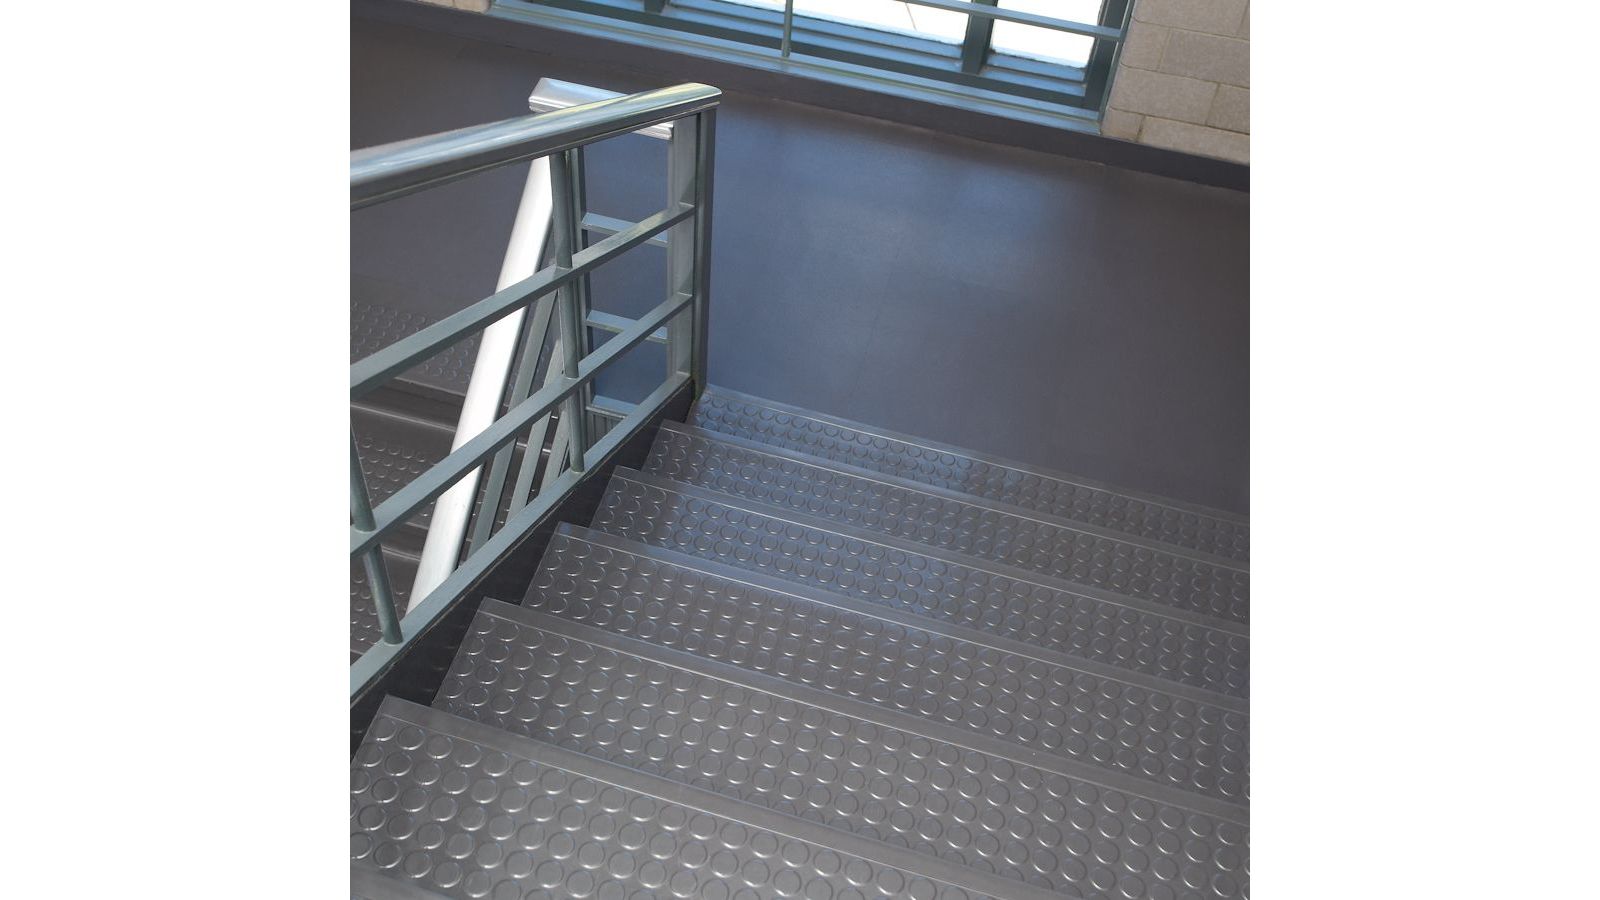 Distinct Designs Rubber Stair Treads